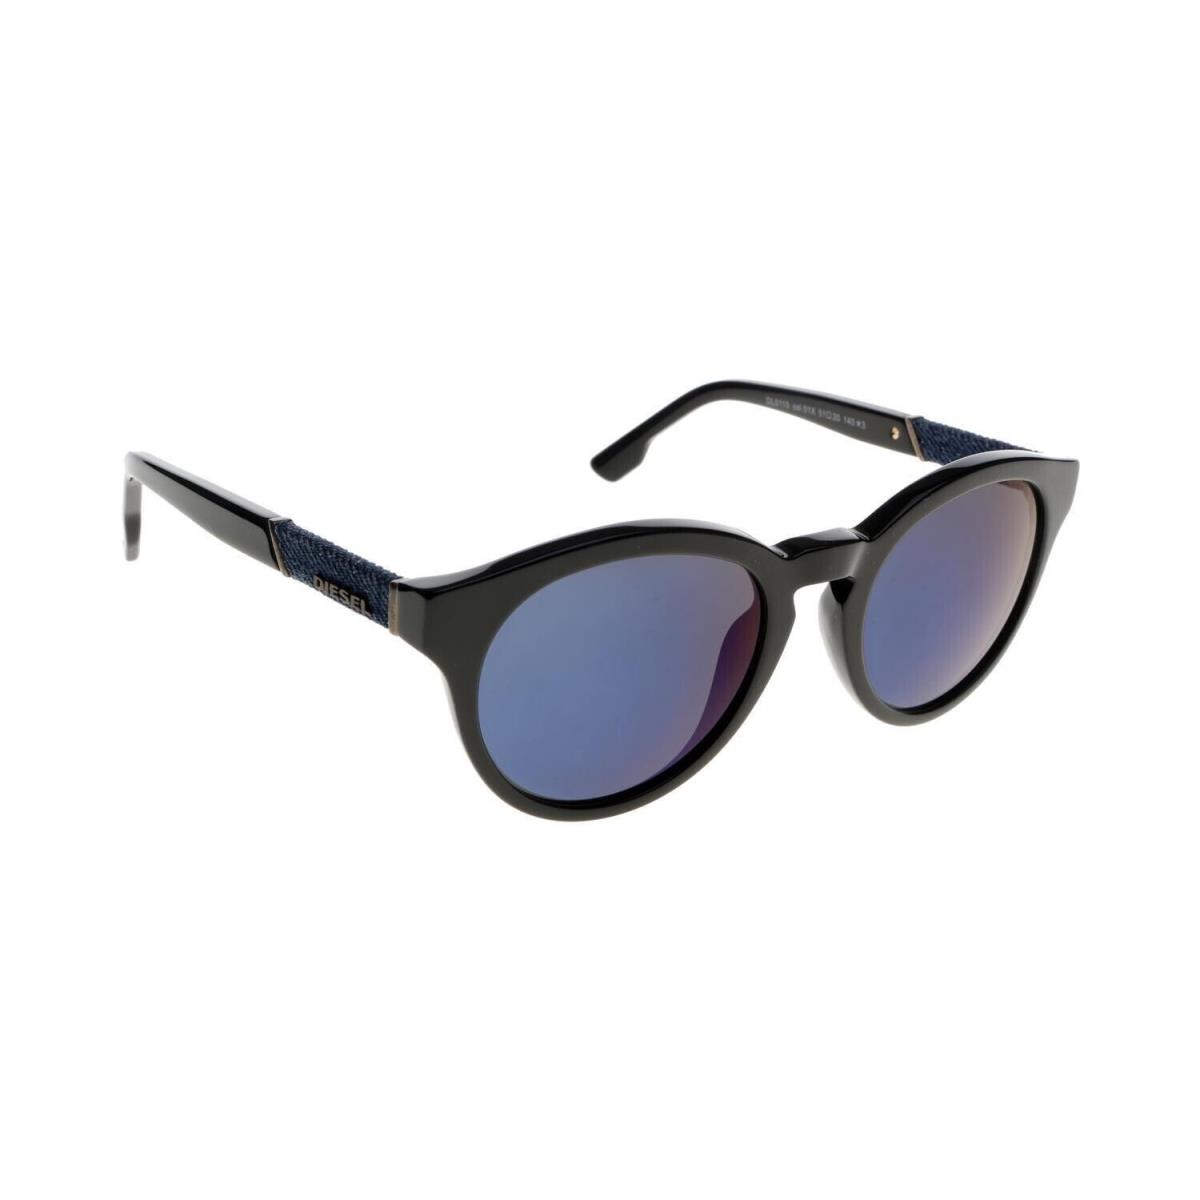 Diesel DL0115 01X Shiny Black Round Blue Gradient Non-polarized 51mm Sunglasses